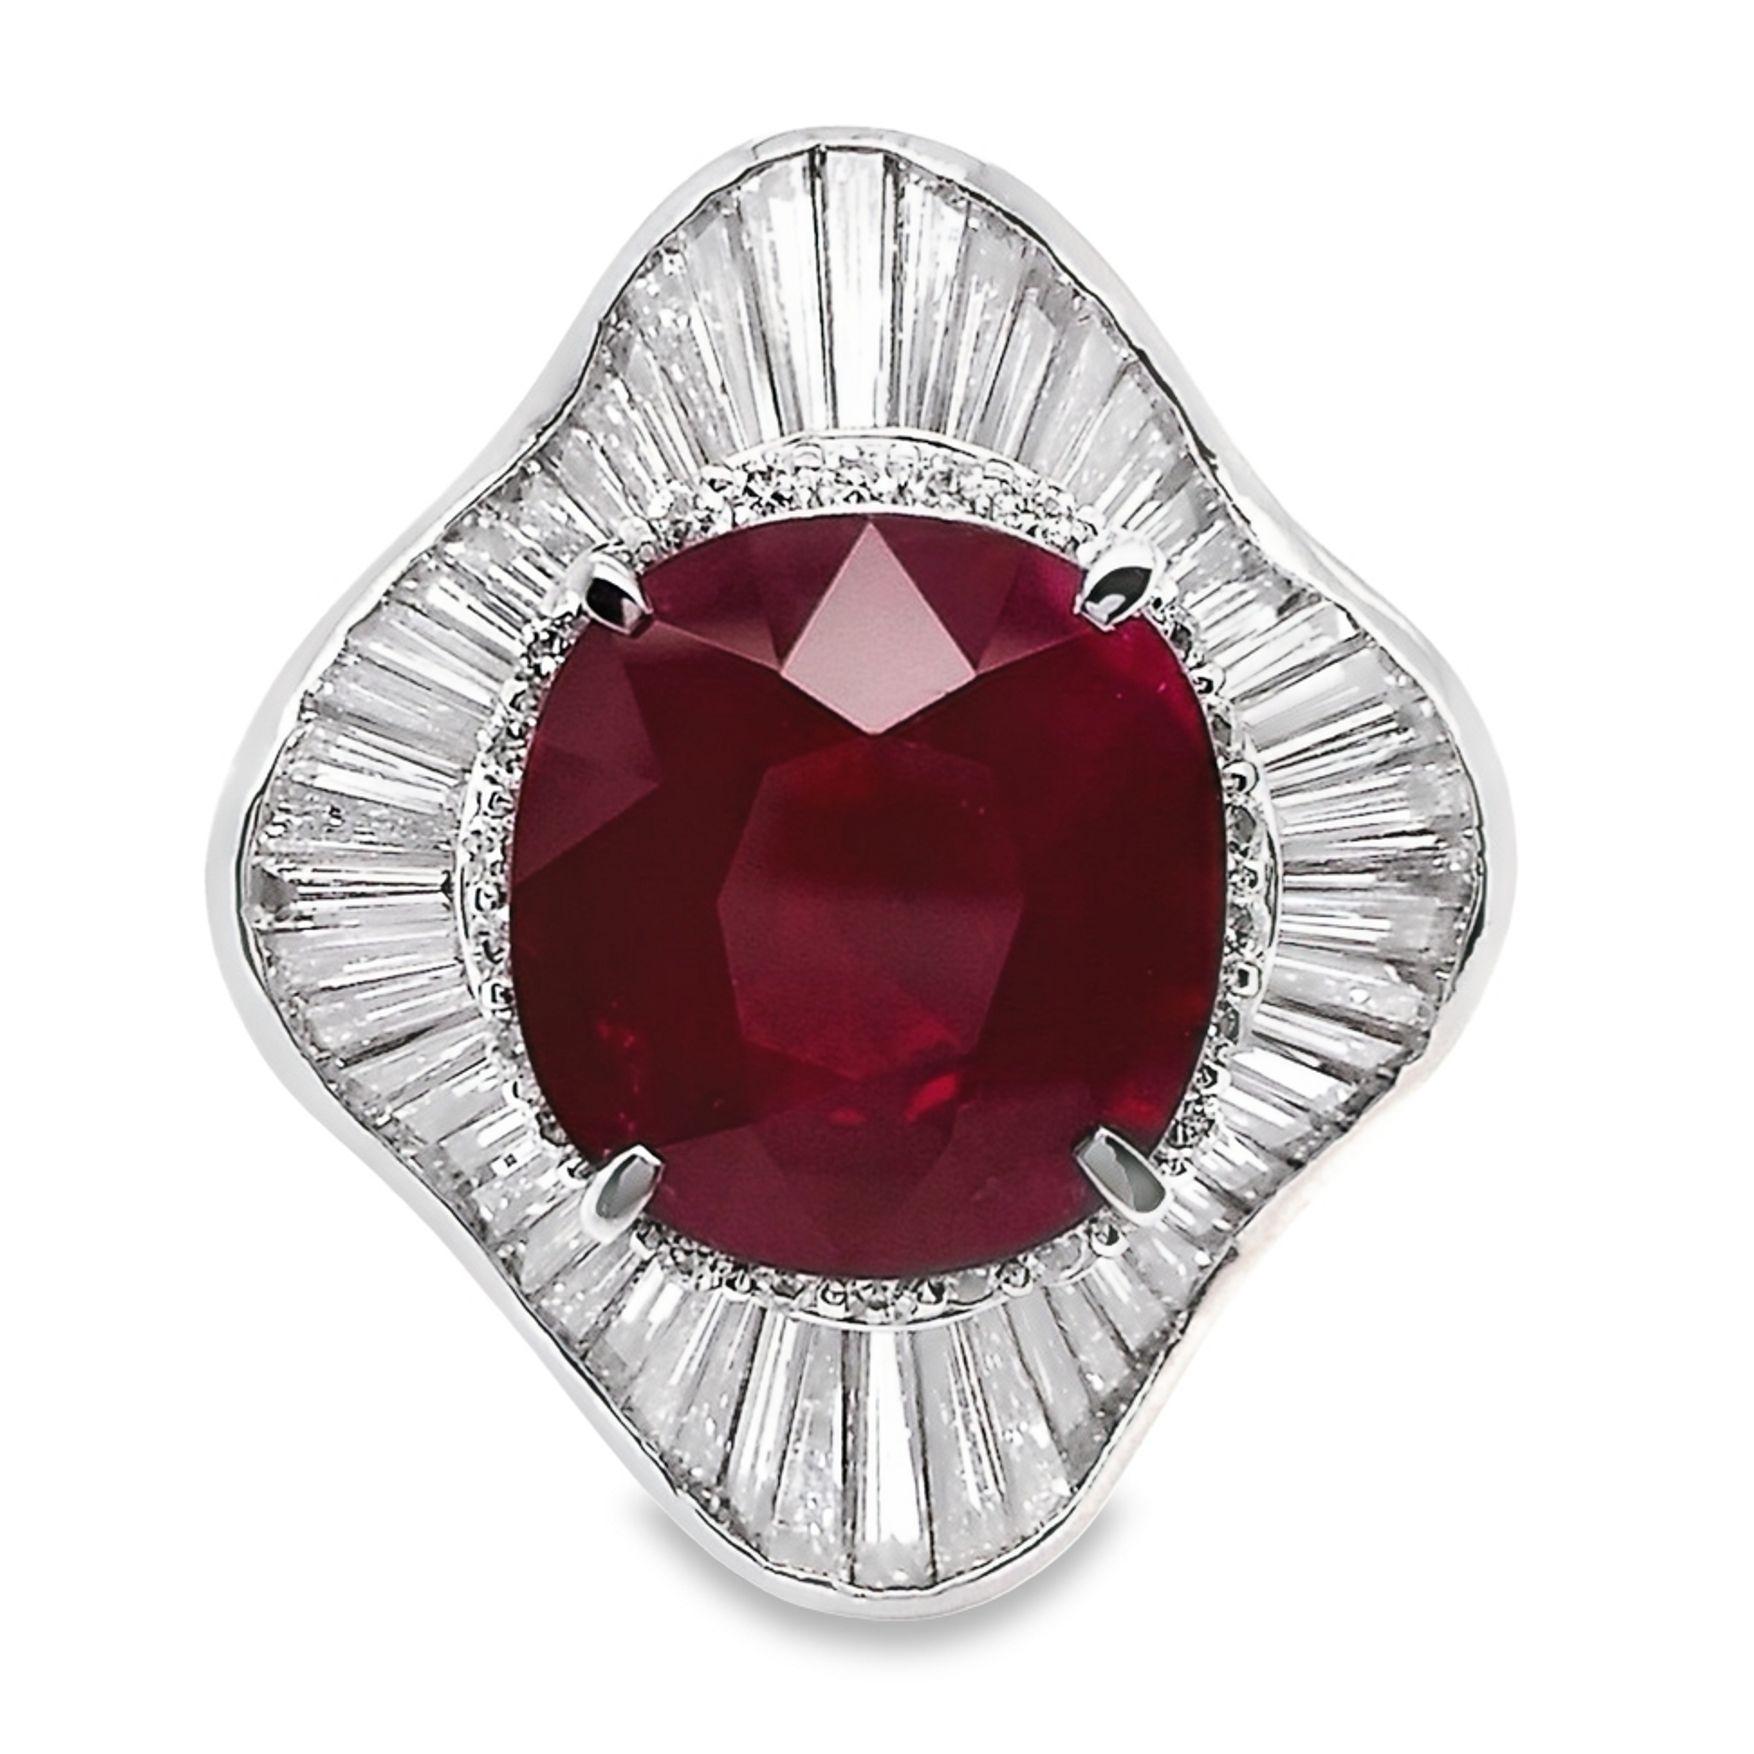 En vente :  Bague en platine certifiée IGI, rubis de Birmanie naturel de 9,39 carats et diamants naturels de 3,93 carats 2